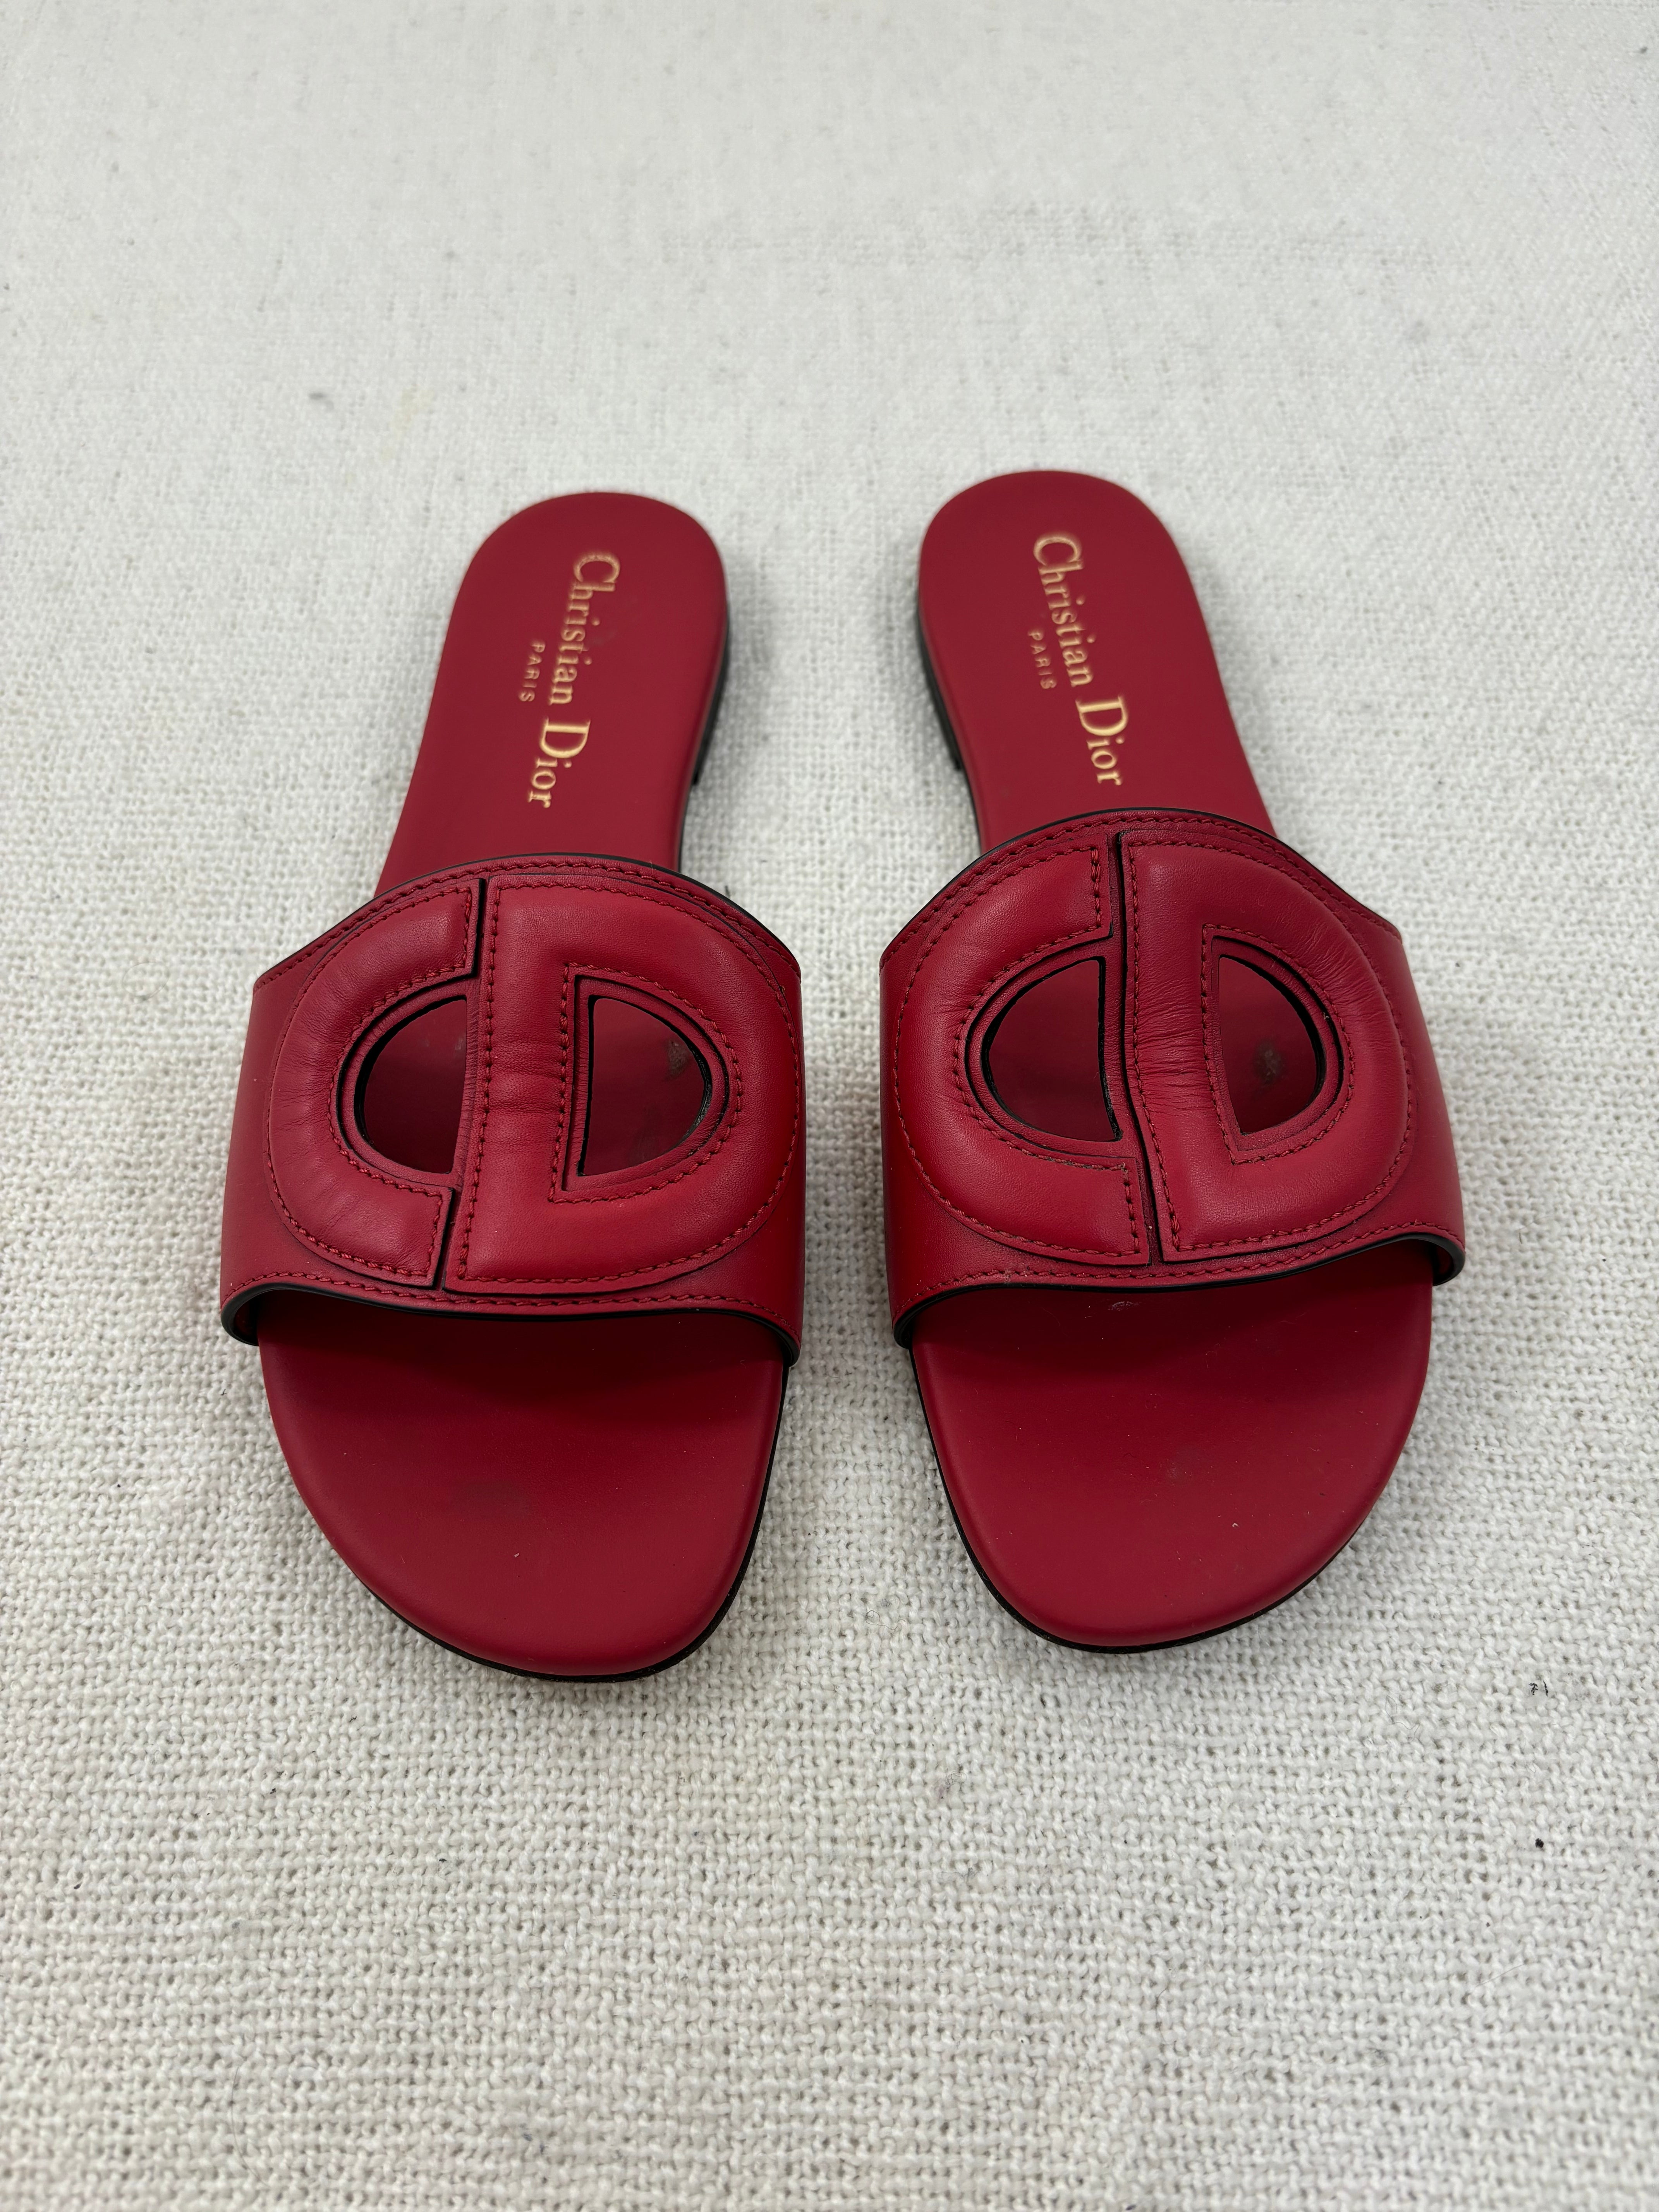 Dior red flats - 3.5 UK